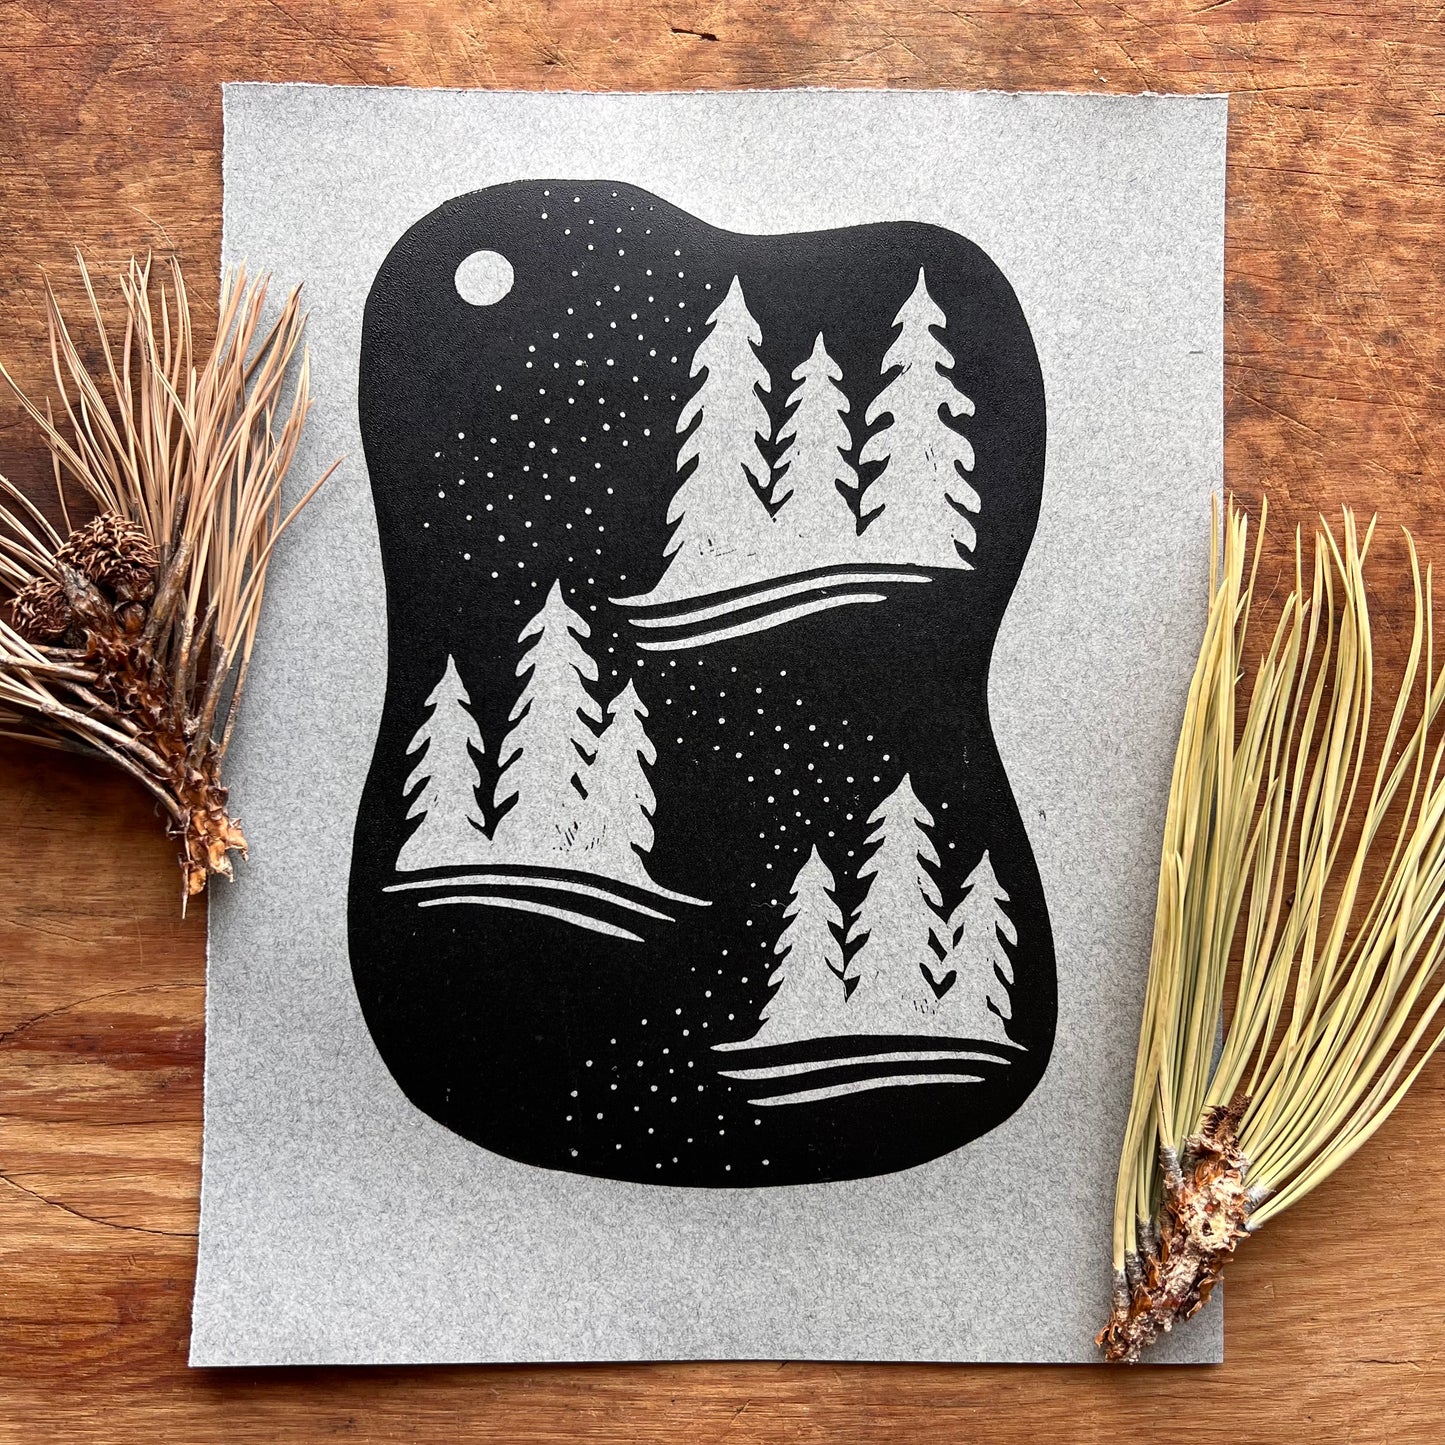 “Star Trail" Linocut Print 8x10" | Hand Printed Black and Tan Block Print